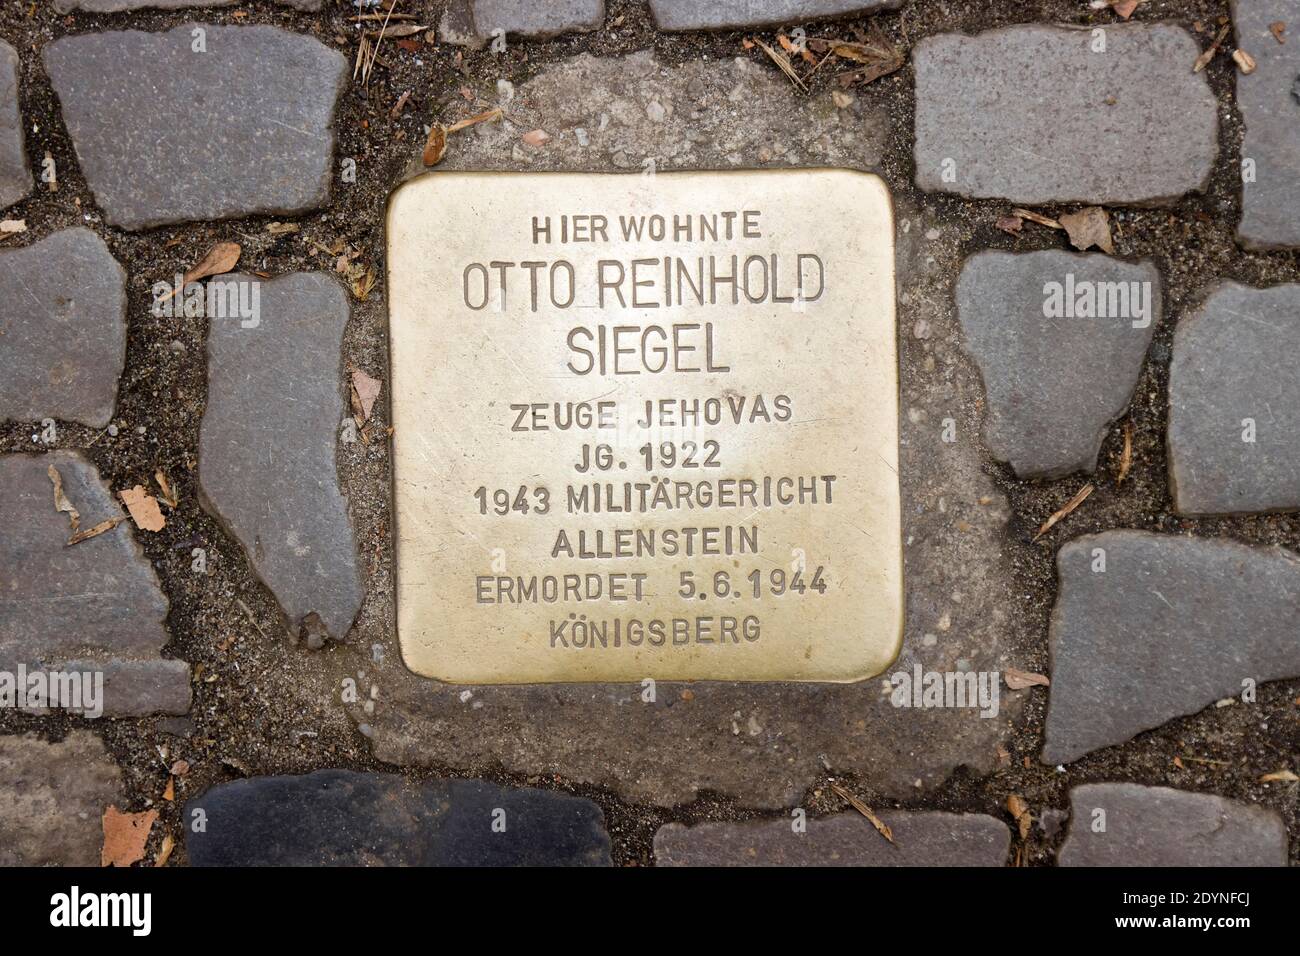 Stolperstein, commemoration of Jehovah's Witness Otto Reinhold Siegel, Berlin, Germany Stock Photo